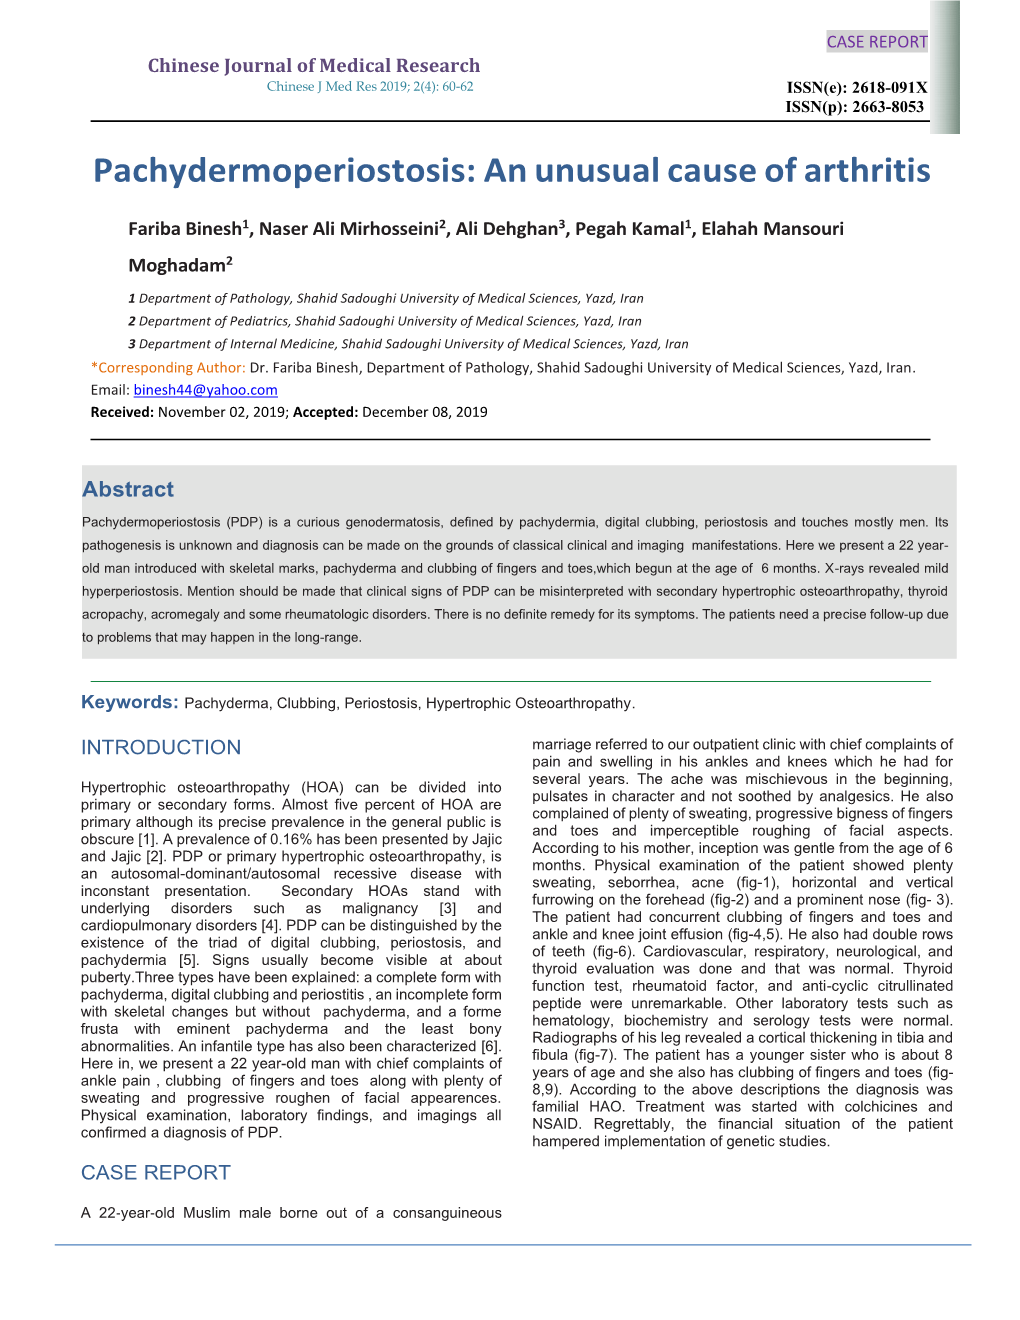 Pachydermoperiostosis: an Unusual Cause of Arthritis